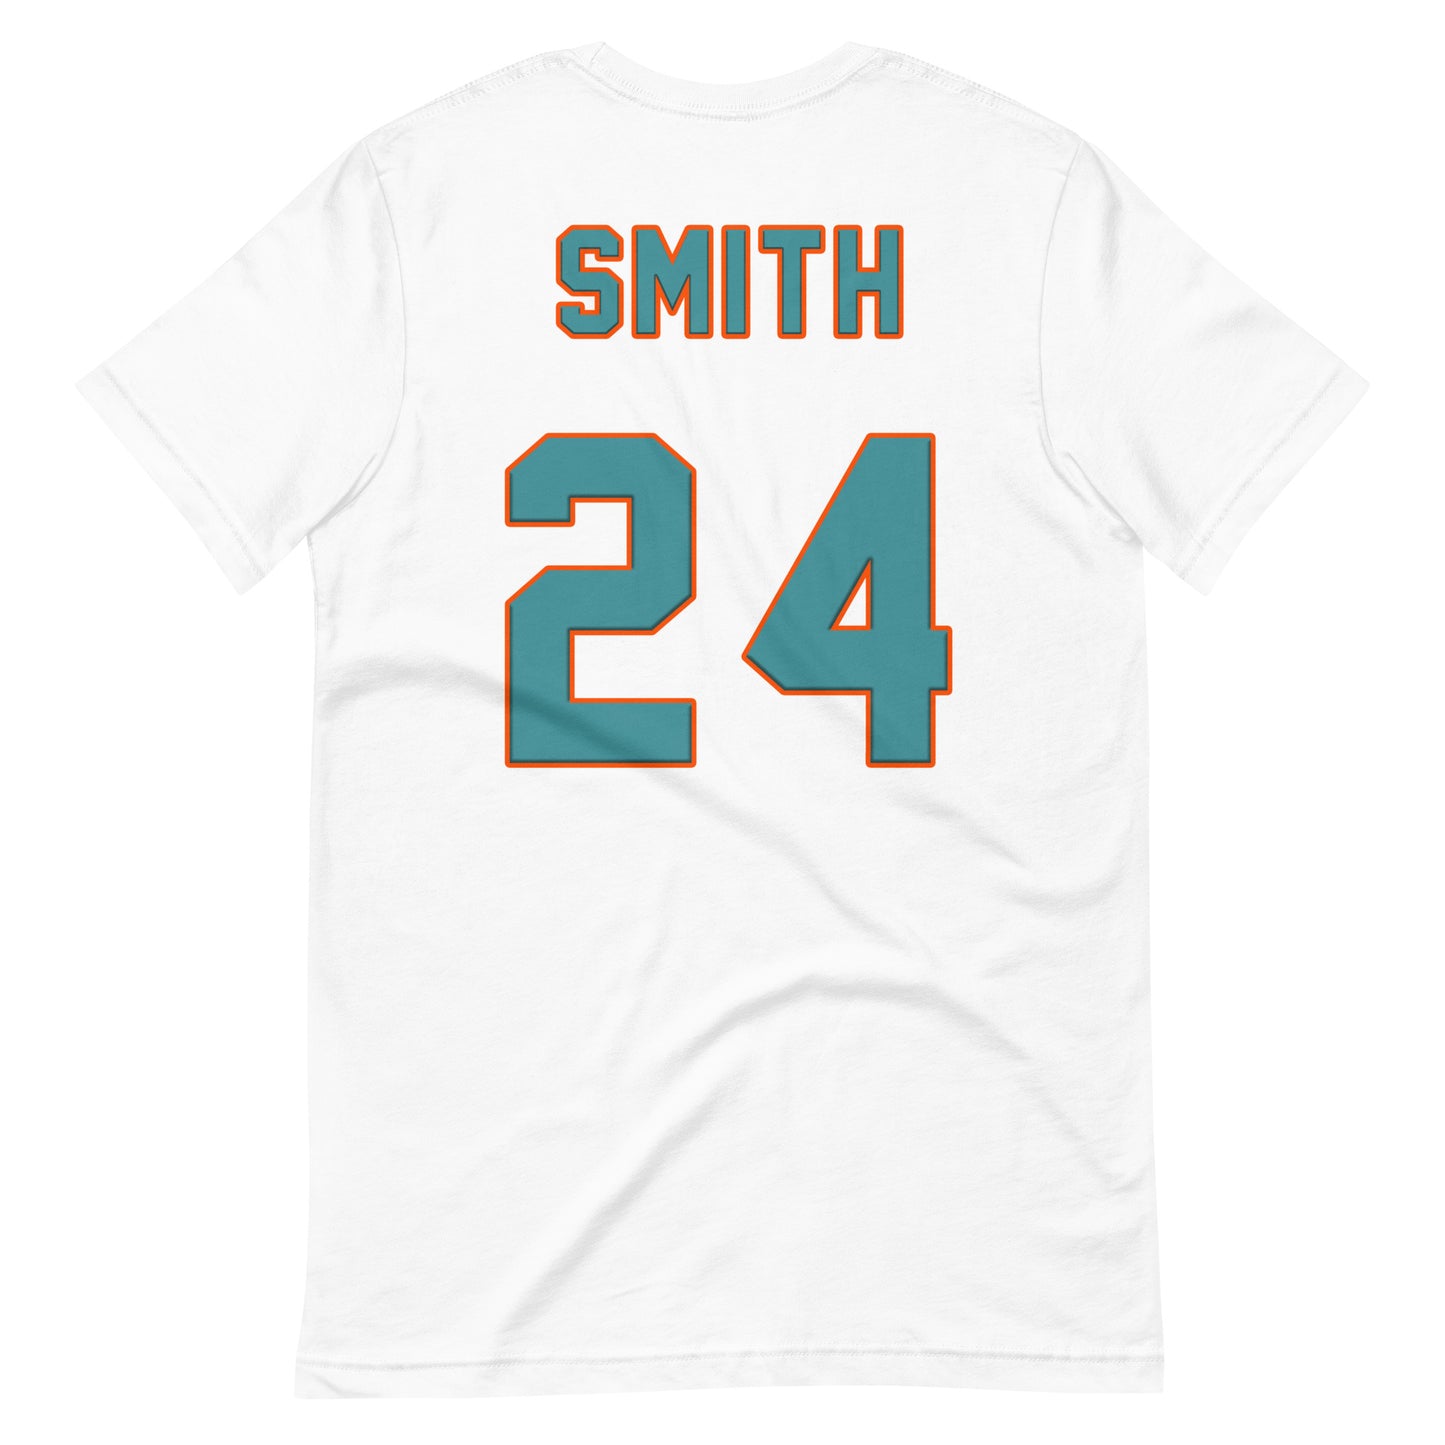 Smith 24 T-Shirt